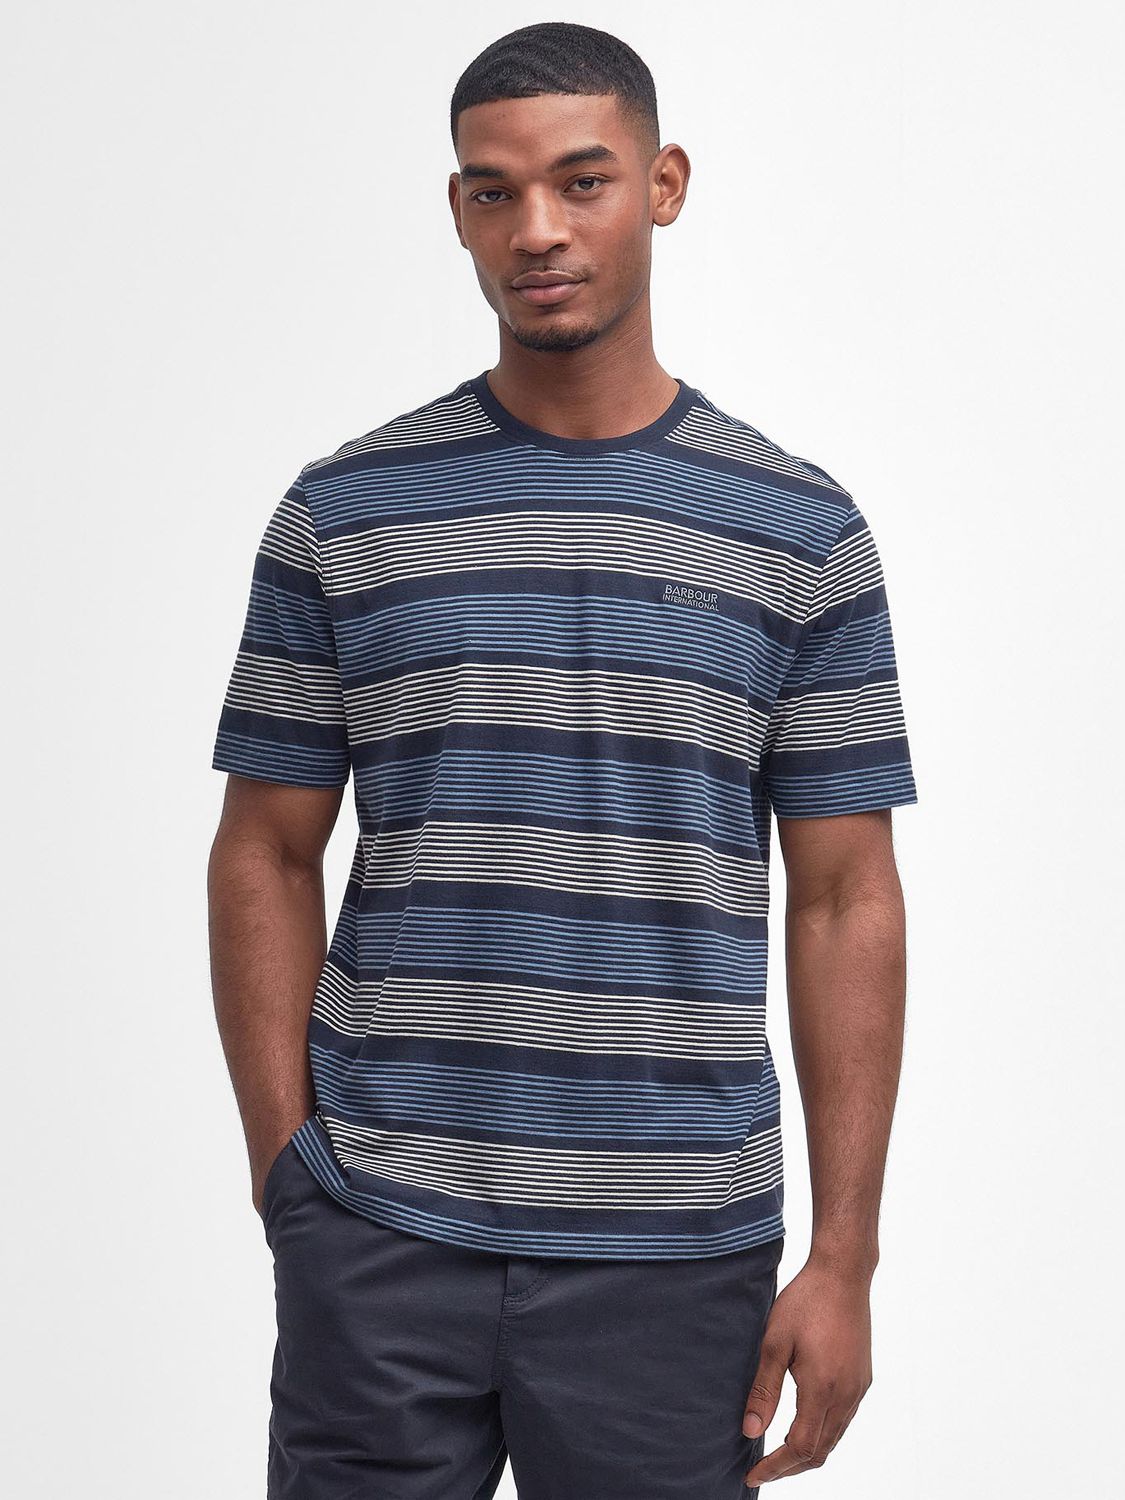 Barbour International Putney Striped T-Shirt, Navy, S